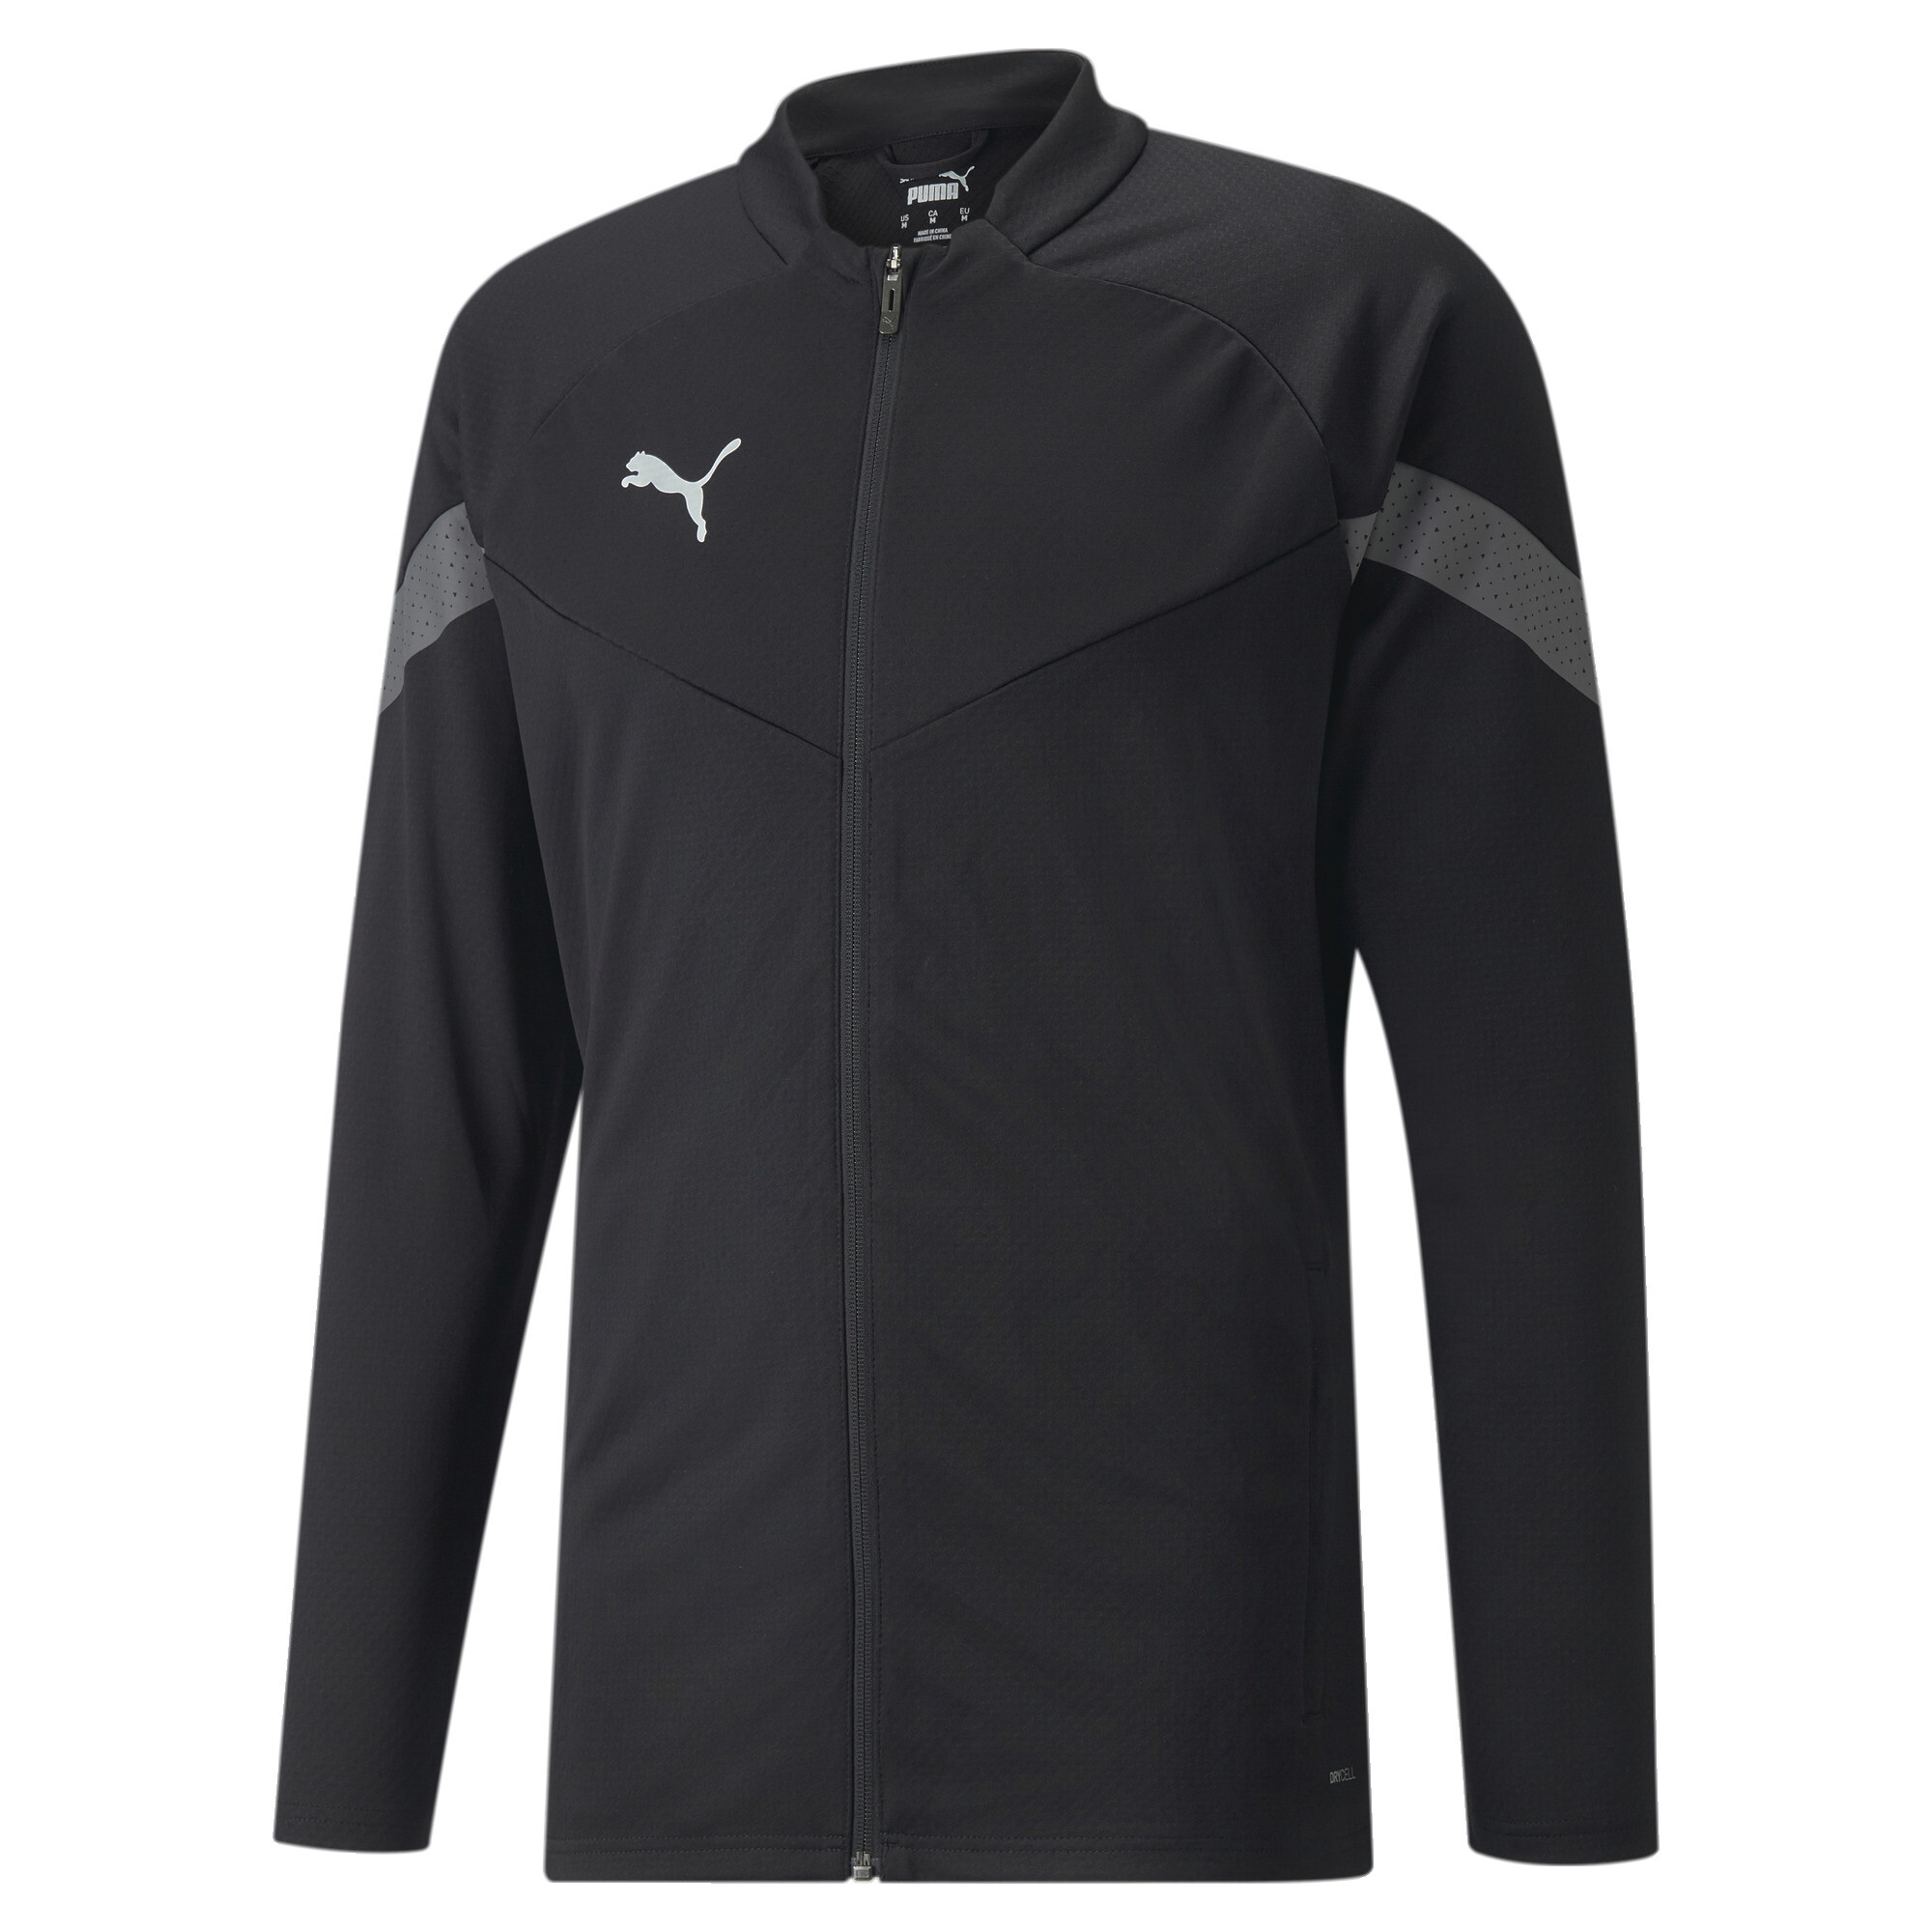 Men's Puma Team FINAL Training's Football Jacket, Black, Size S, Clothing